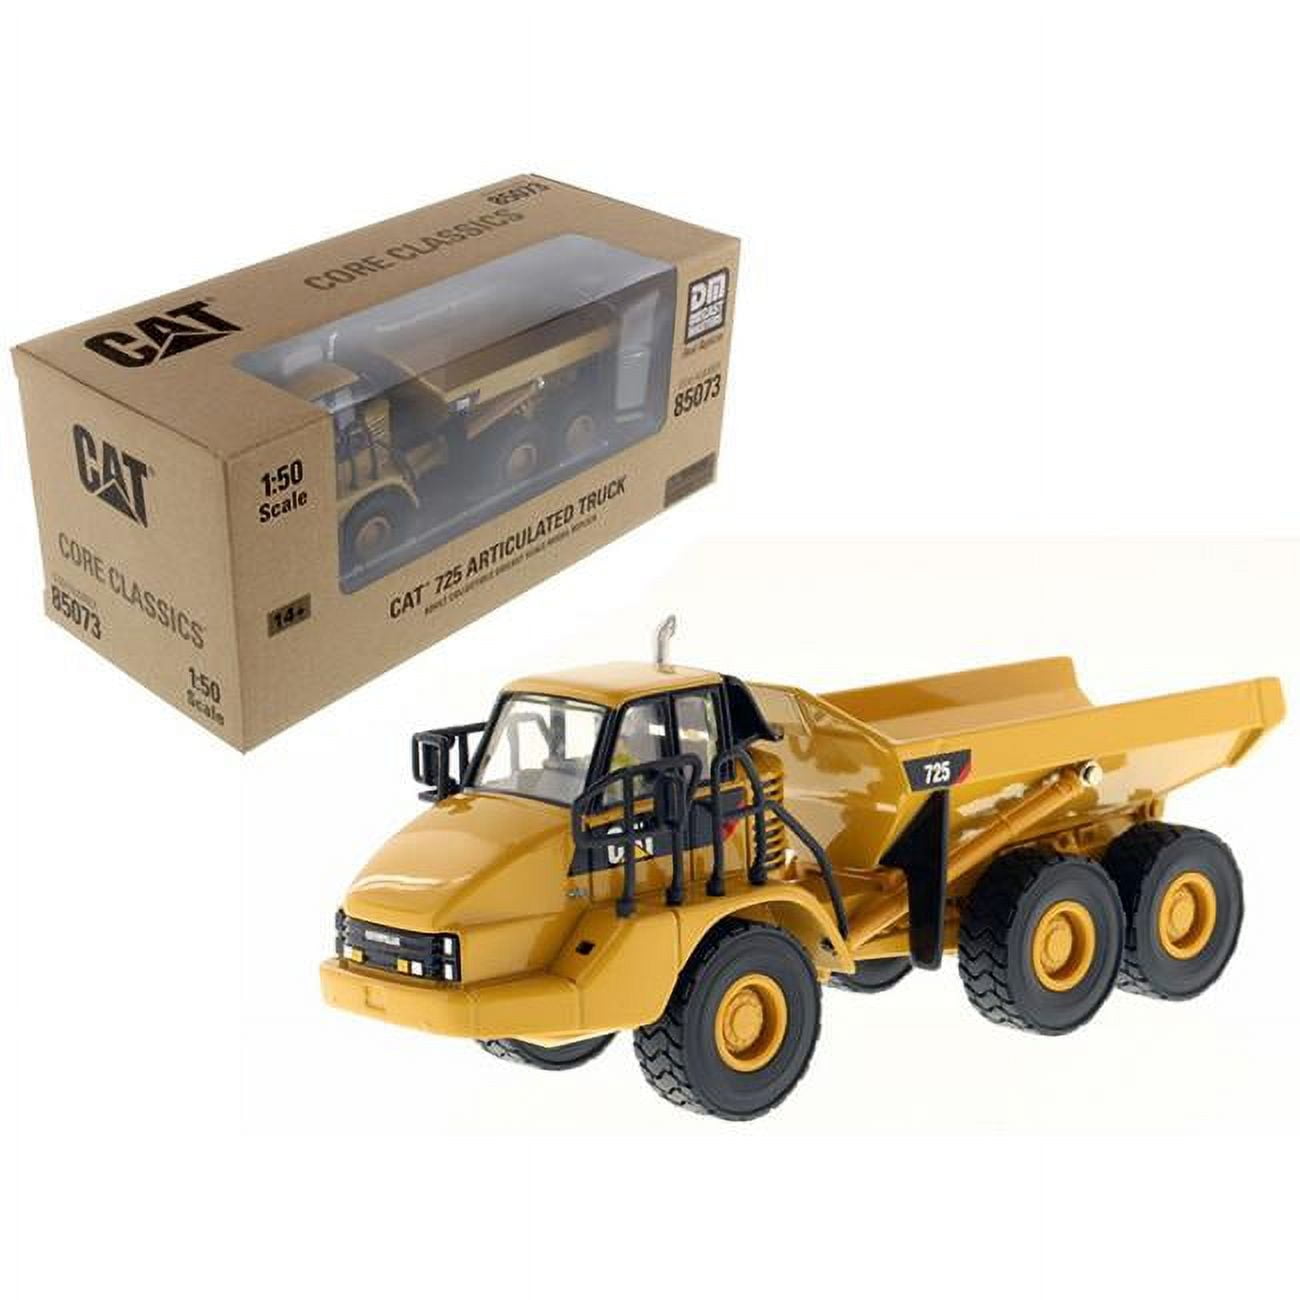 85073c 1 By 50 Scale Diecast Cat Caterpillar 725 Articulated Truck Model